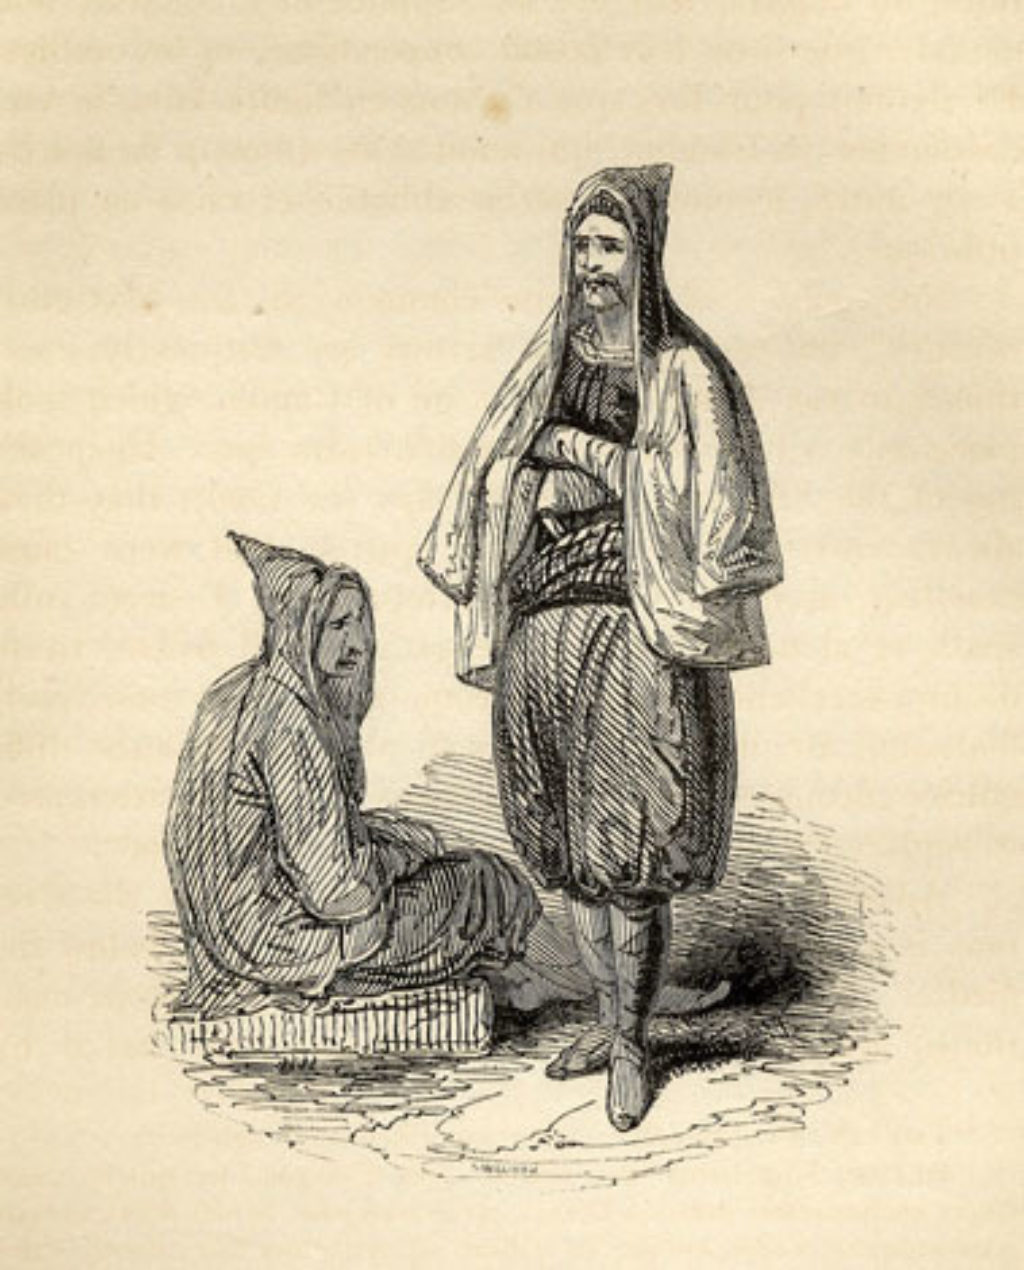 Cretan peasants after the Revolution (R. Pashley, 1834)